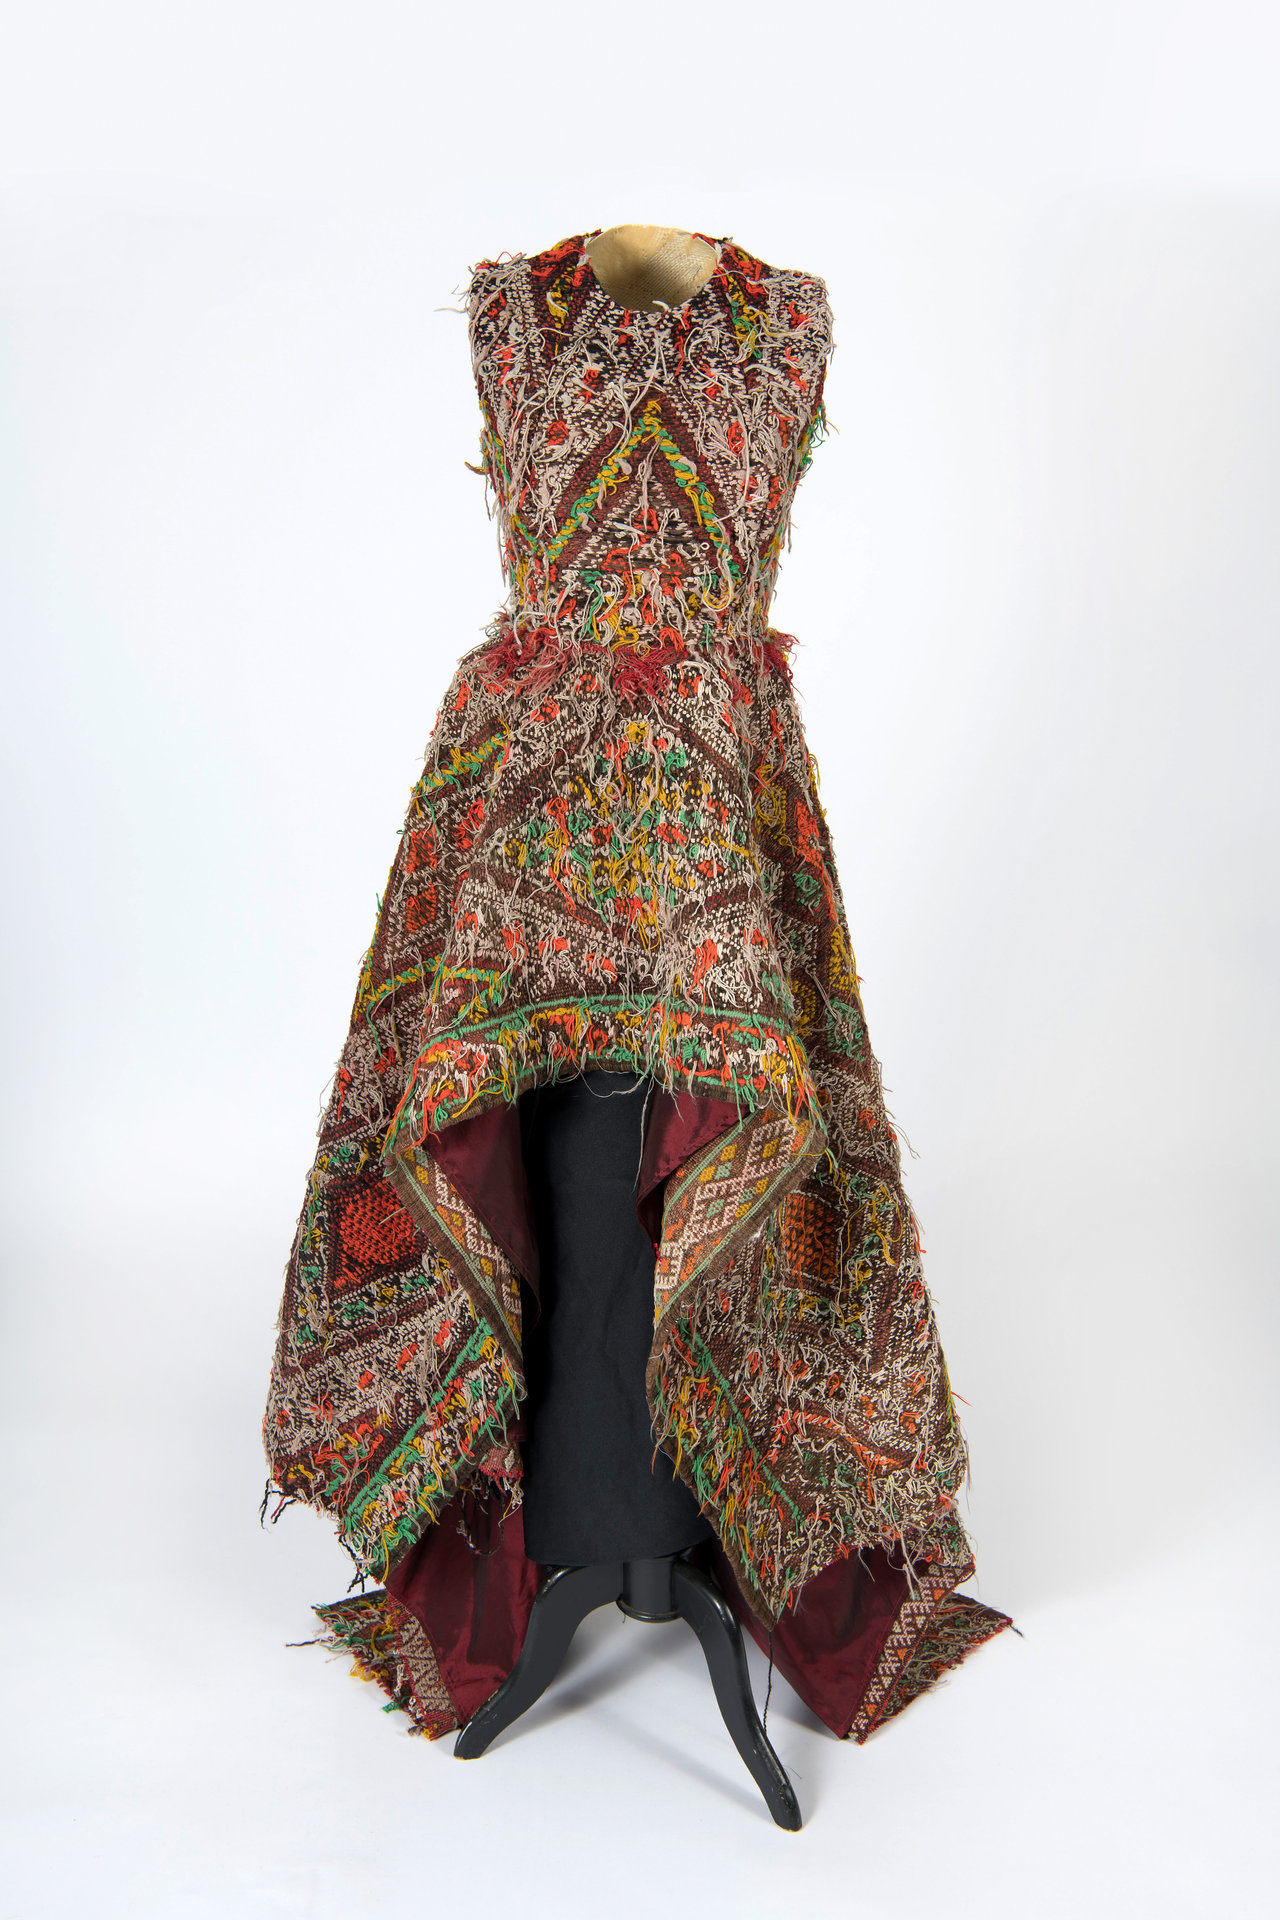 Marokkaanse jurk te zien in het Afrika Museum